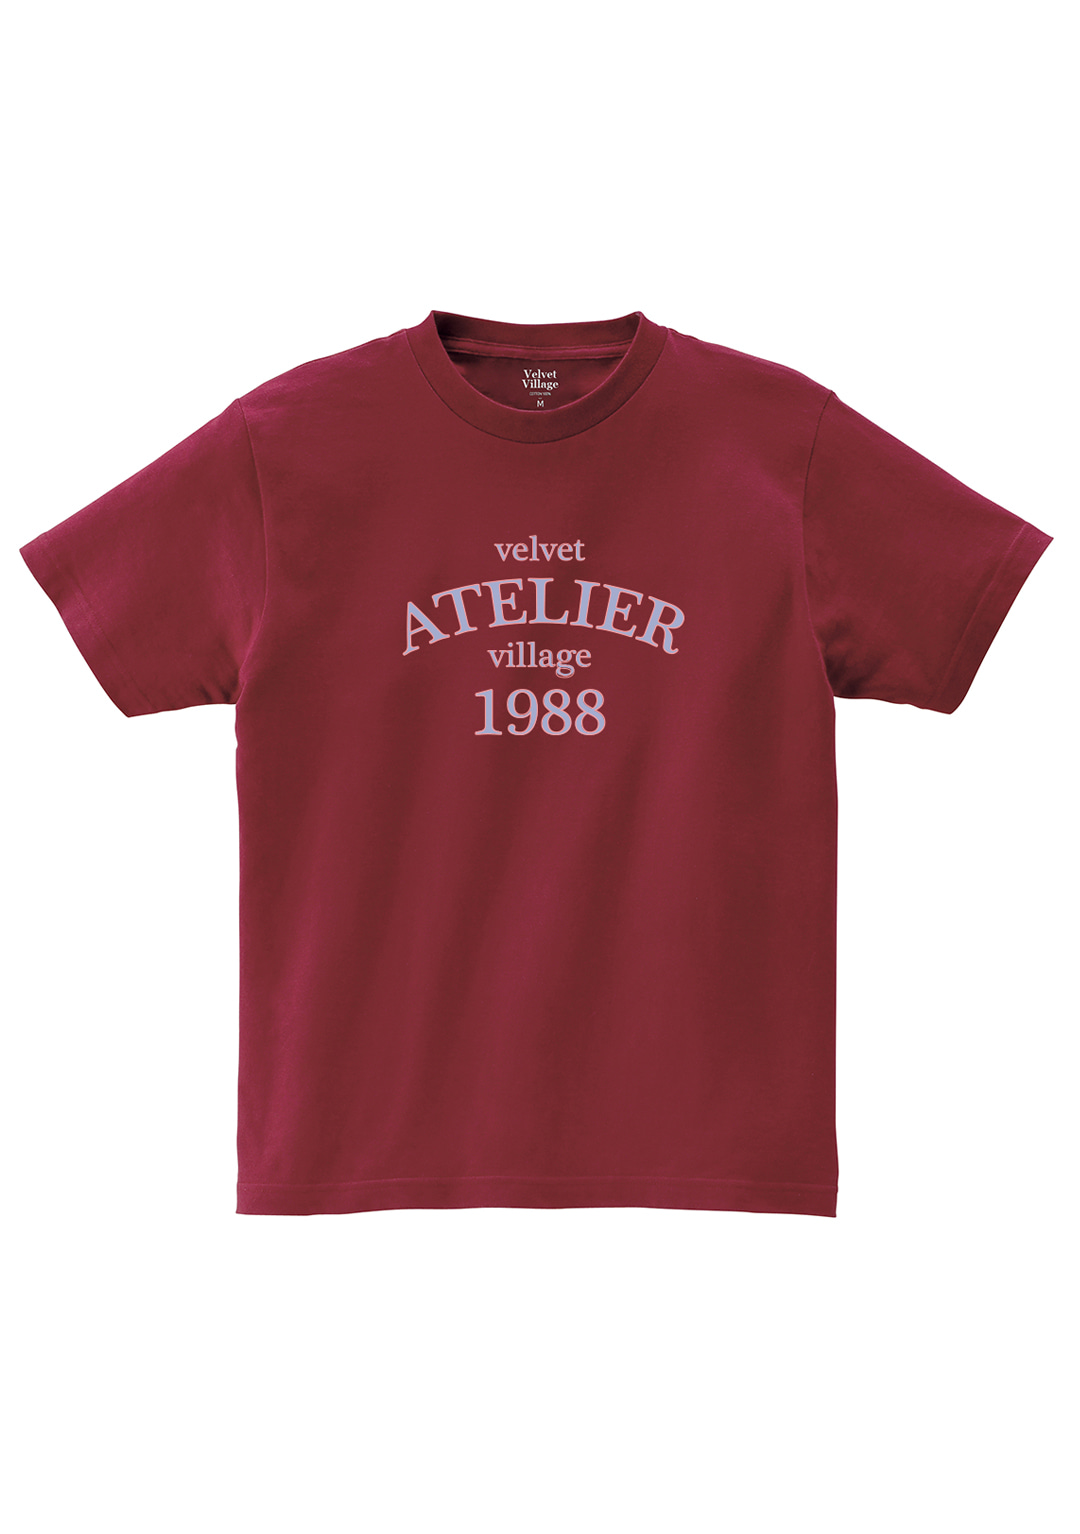 Aterier T-shirt (Wine)